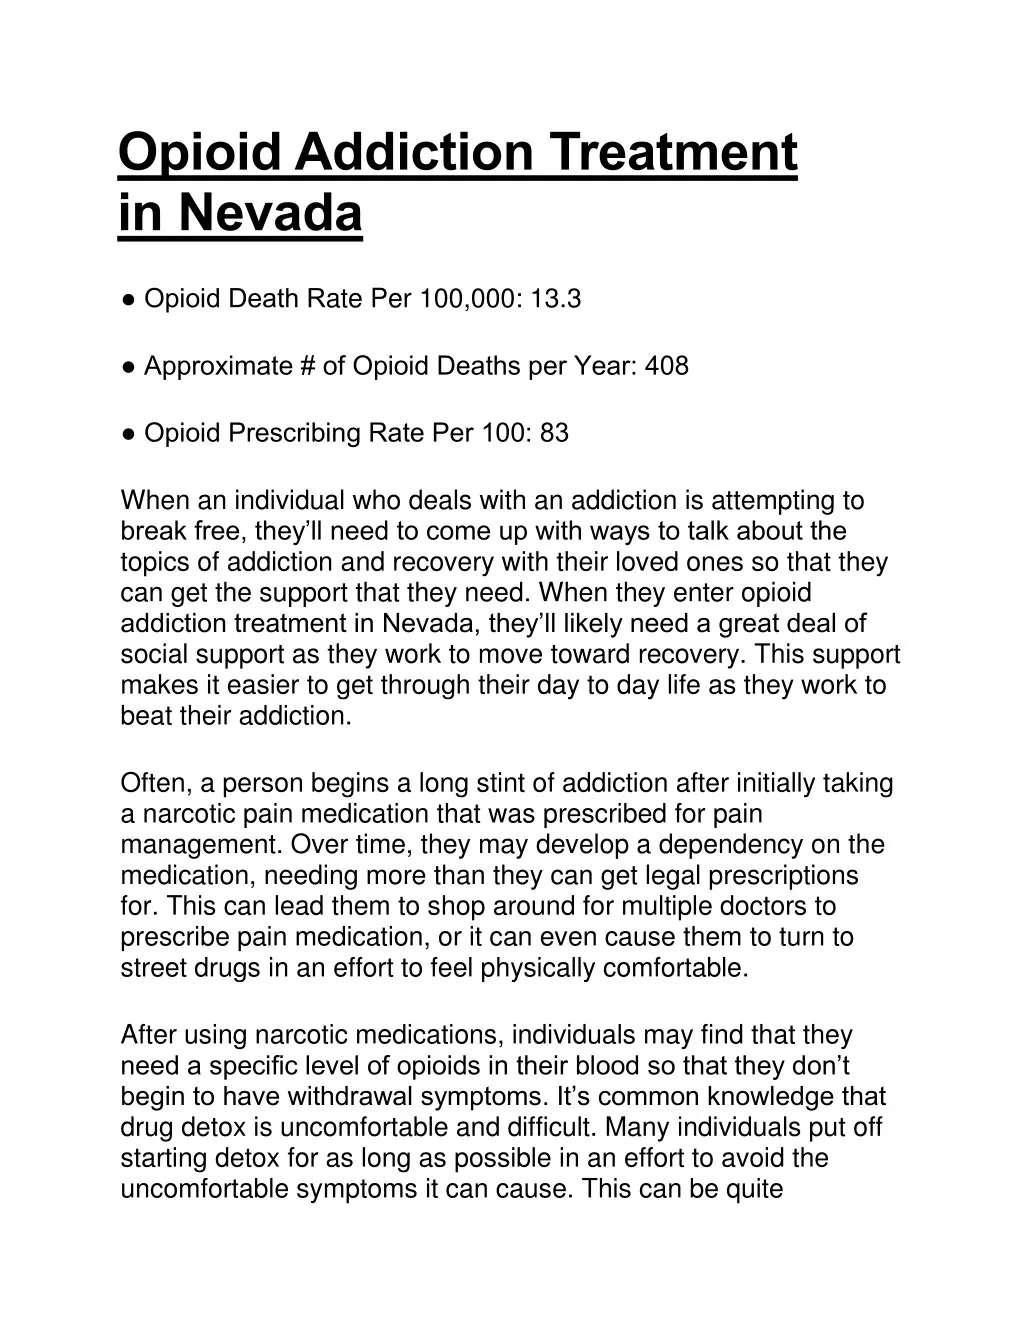 opioid addiction treatment in nevada